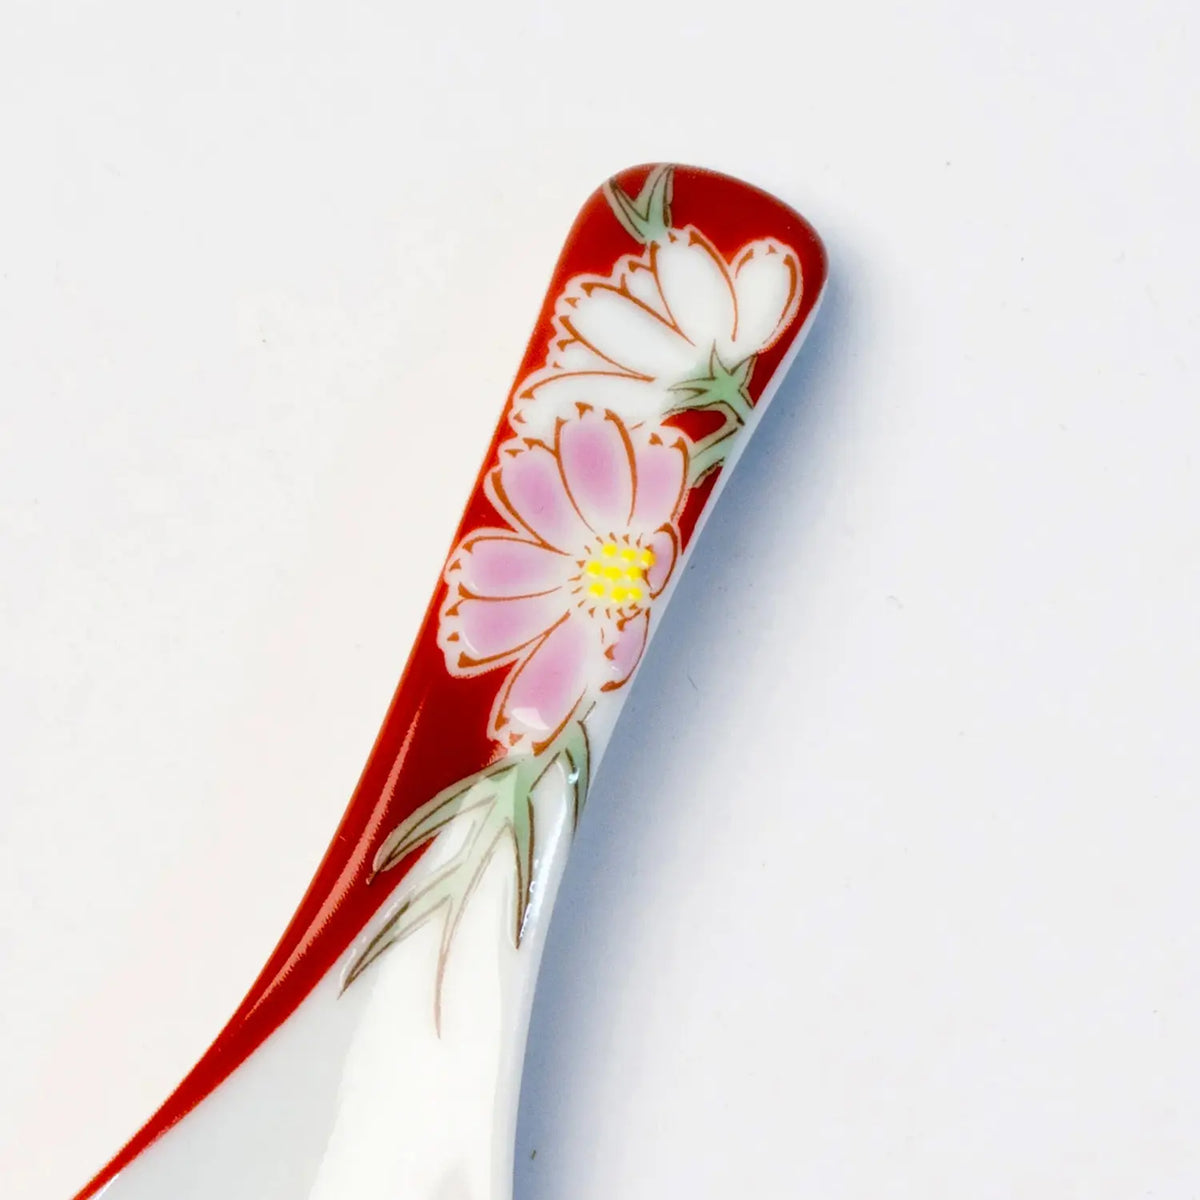 SEIKOU SHIKI-NO-HANA Kutani Porcelain Renge Spoon 5 pcs